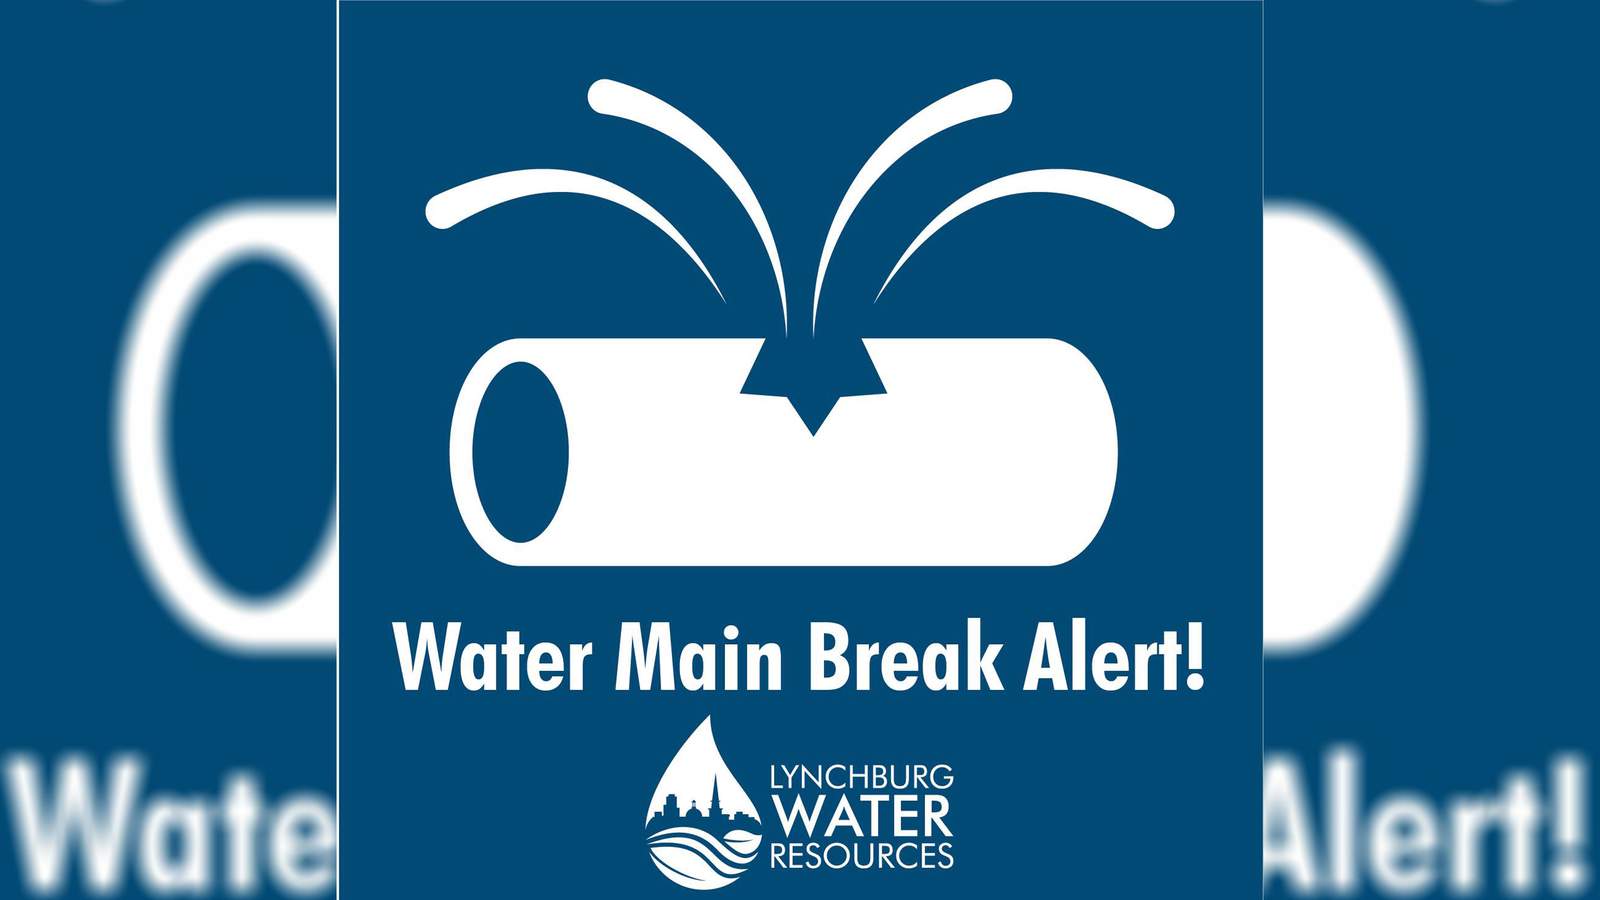 Water main break detours traffic in Lynchburg - WSLS 10